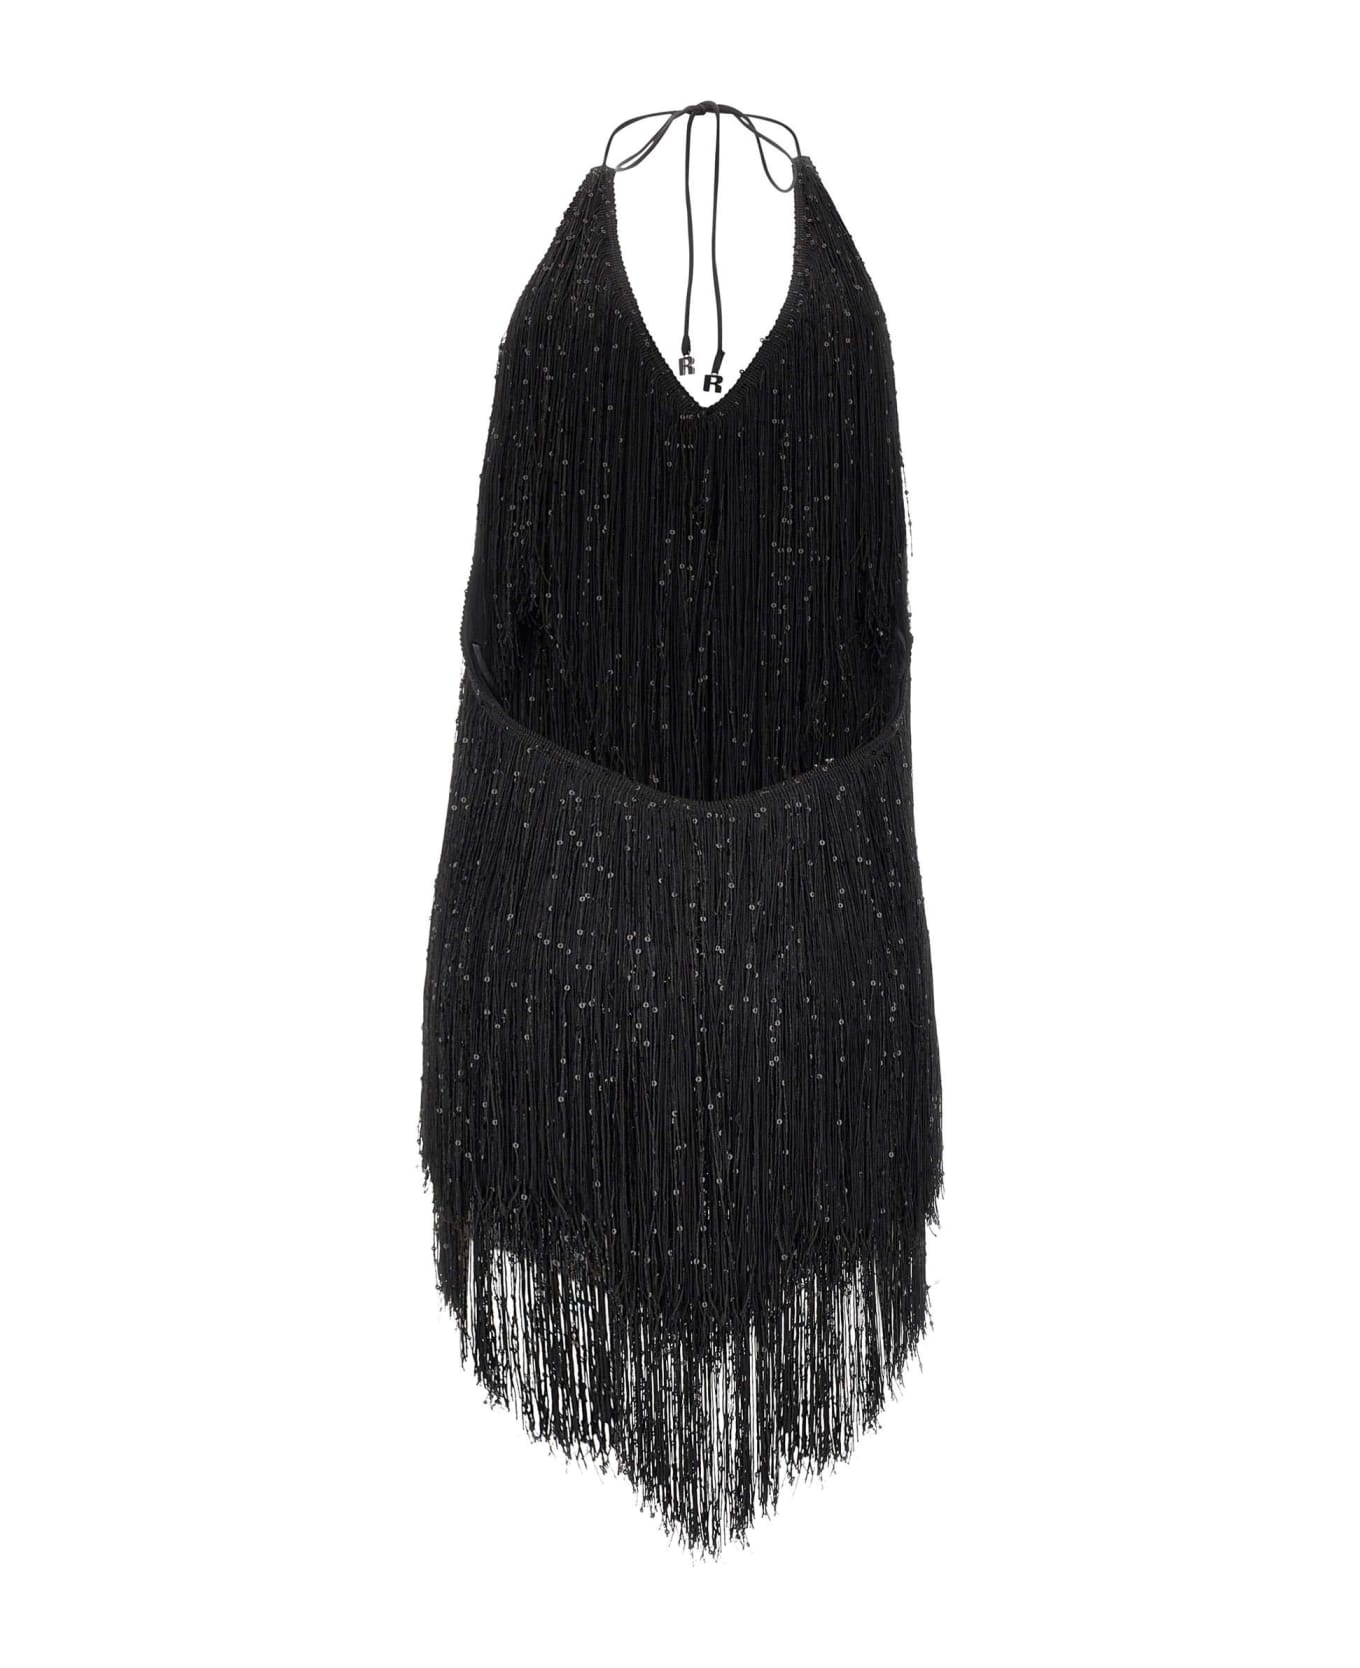 Rotate by Birger Christensen "sequin Fringe" Dress - BLACK